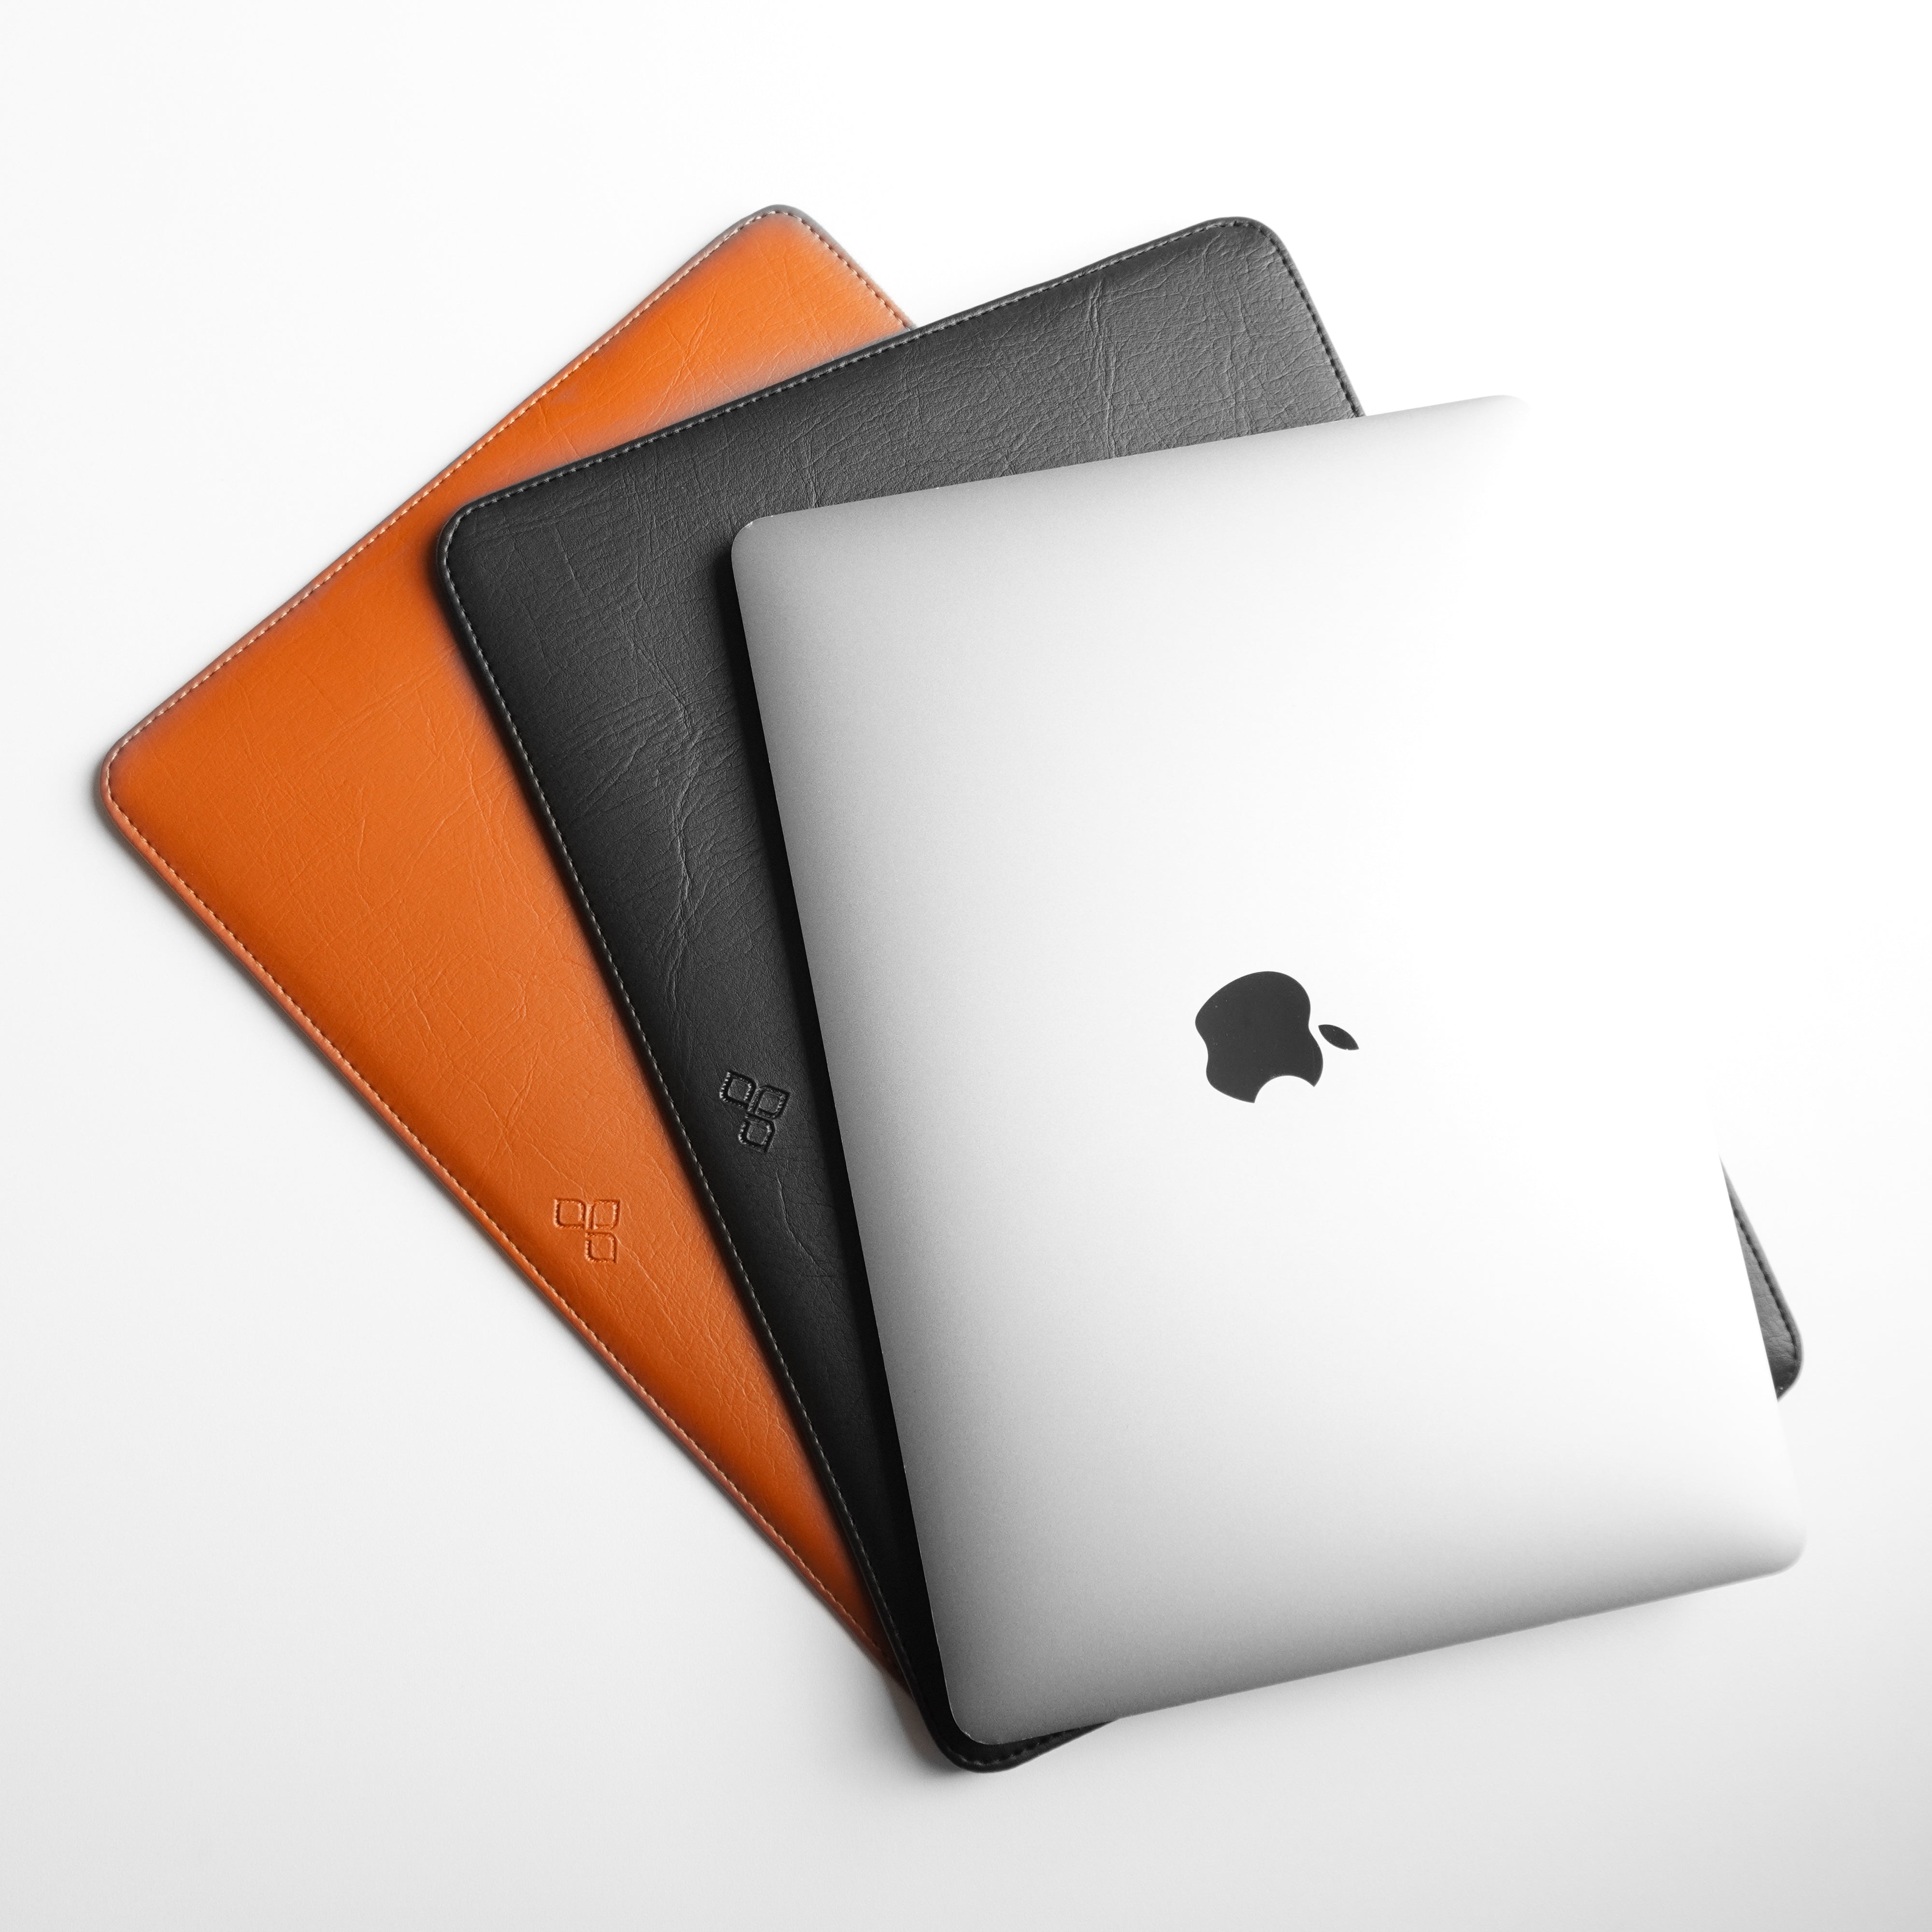 Sleeve Case for Macbook